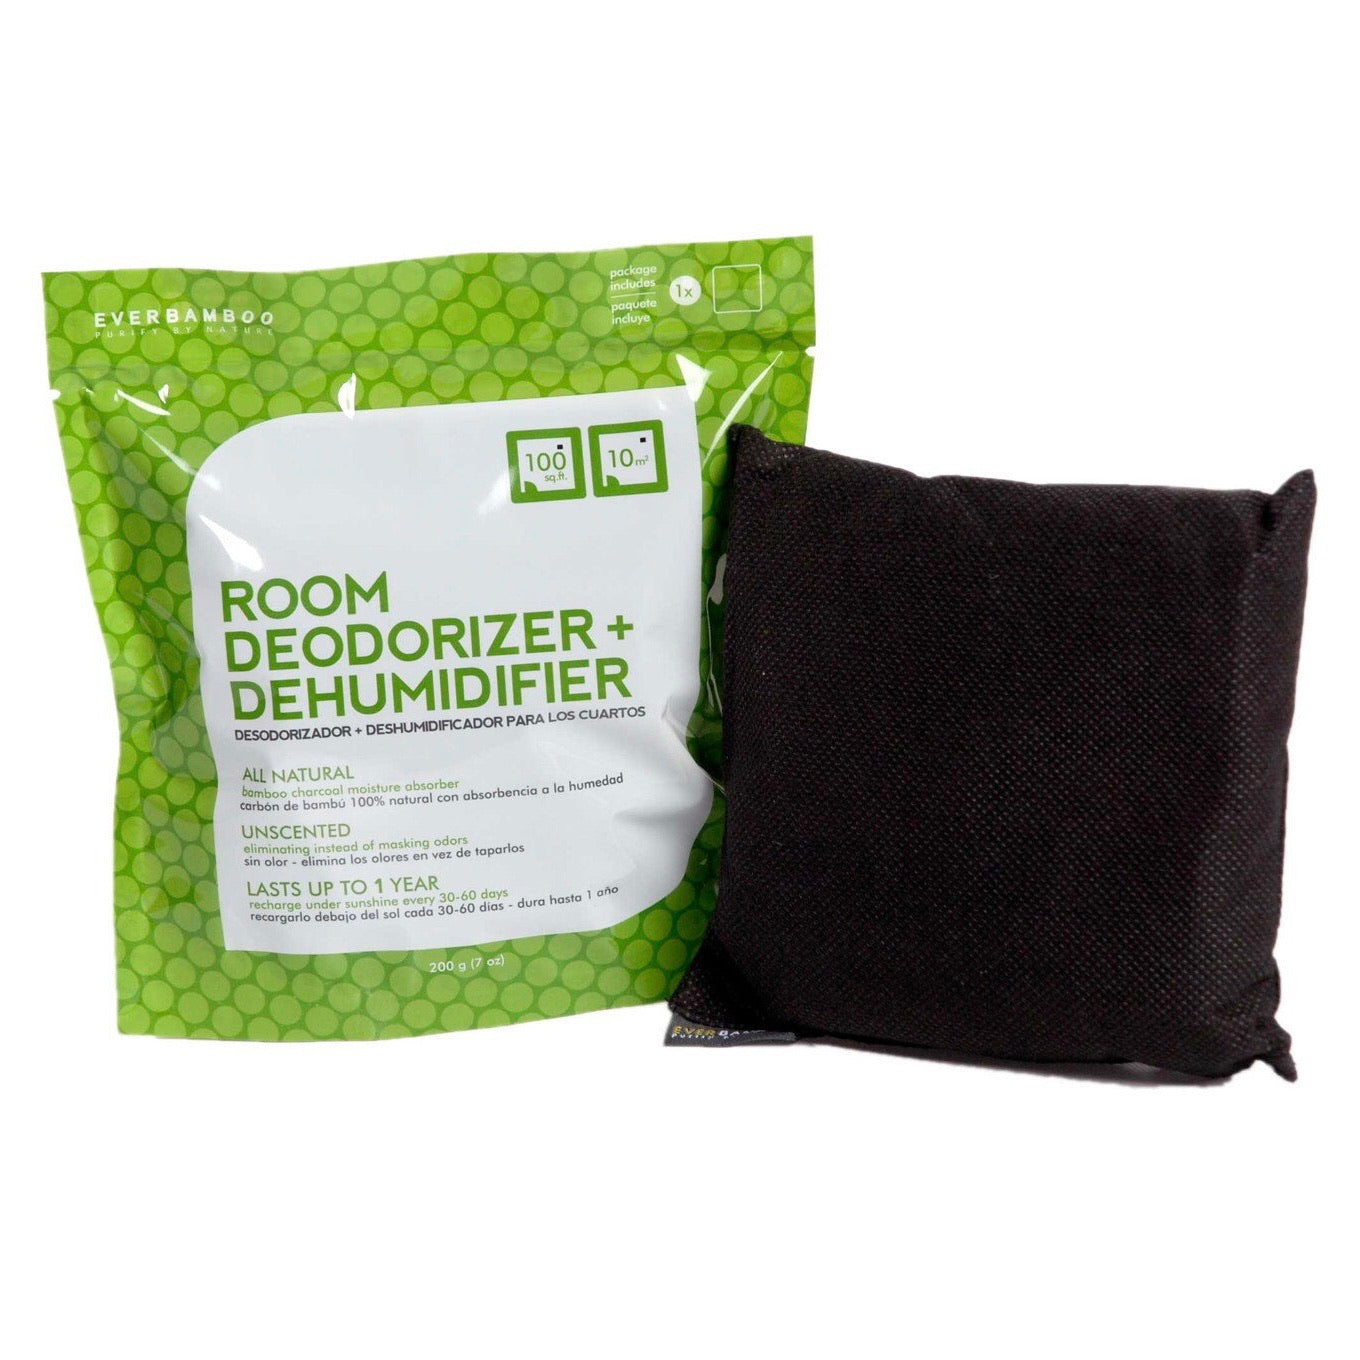 EverBamboo Room Deodorizer+Dehumidifier